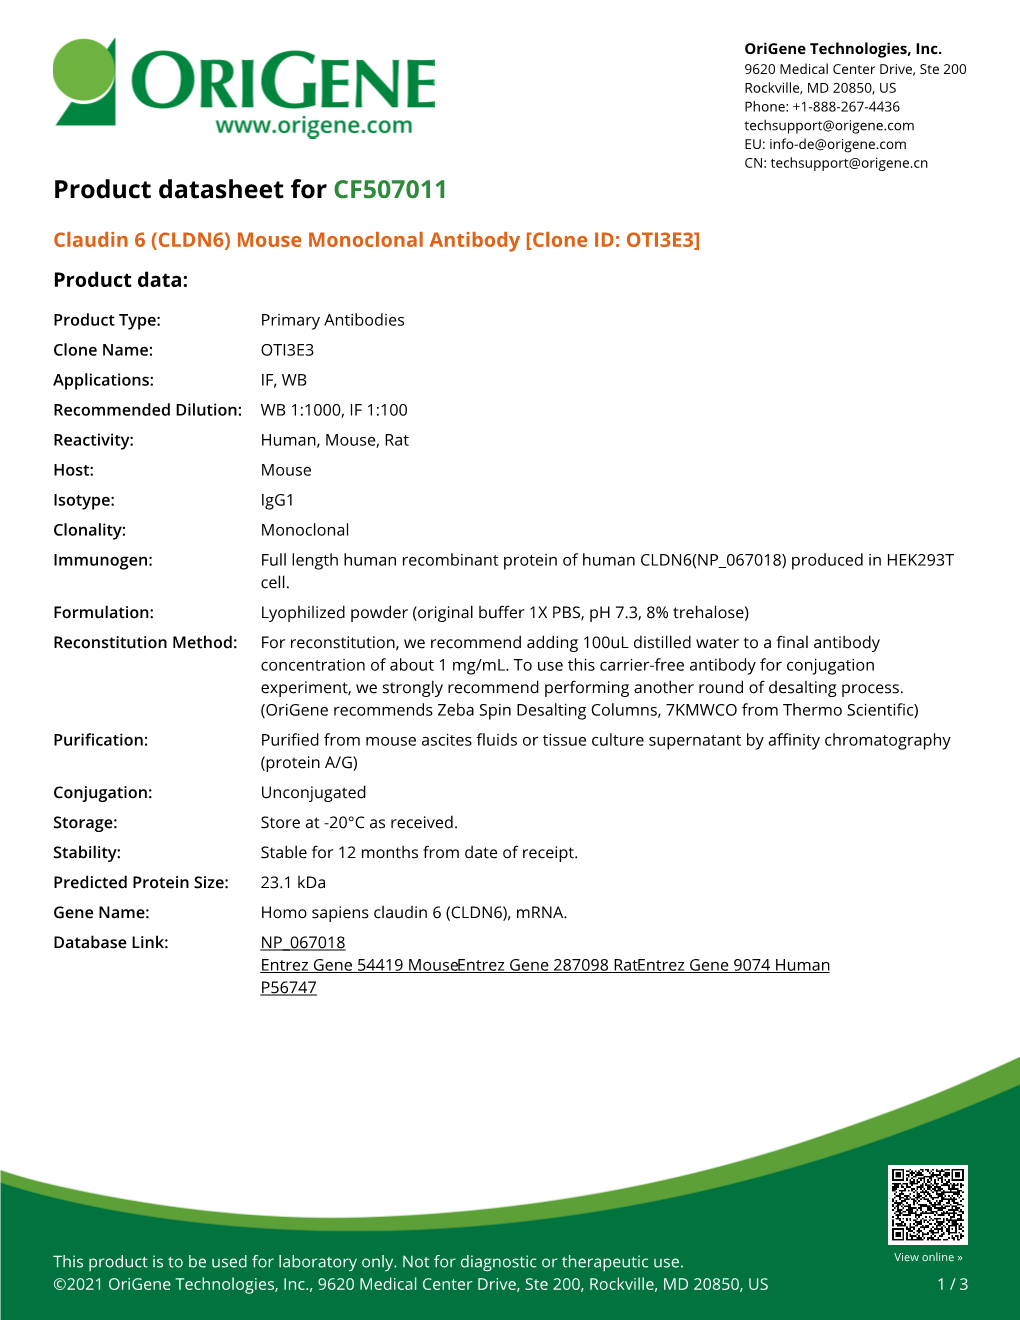 Claudin 6 (CLDN6) Mouse Monoclonal Antibody [Clone ID: OTI3E3] Product Data